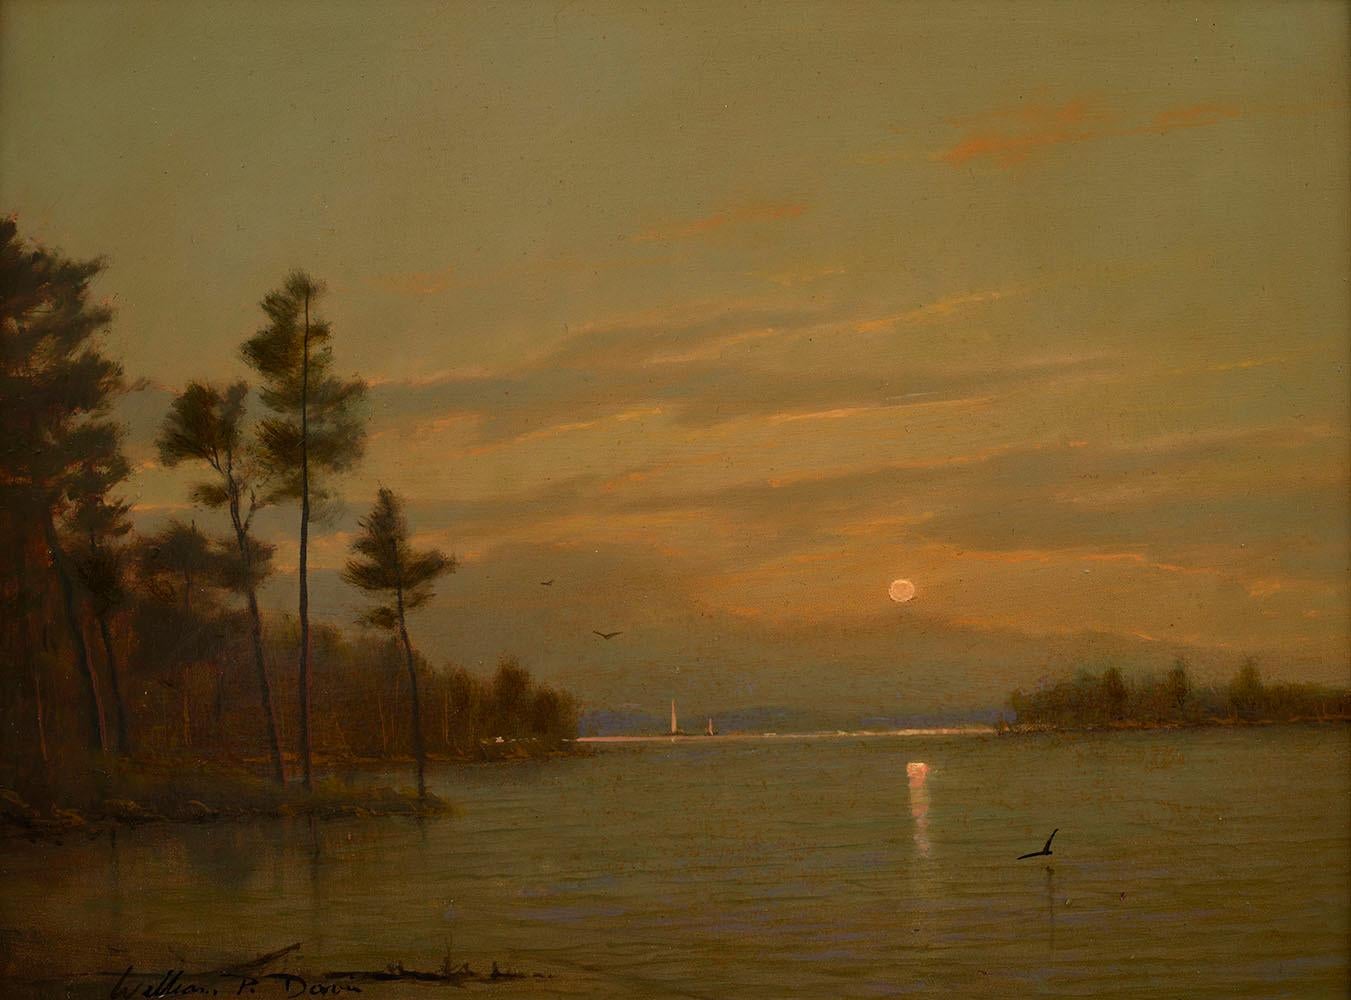 William Davis, Jr. Landscape Painting - Inlet Sunset, 2019